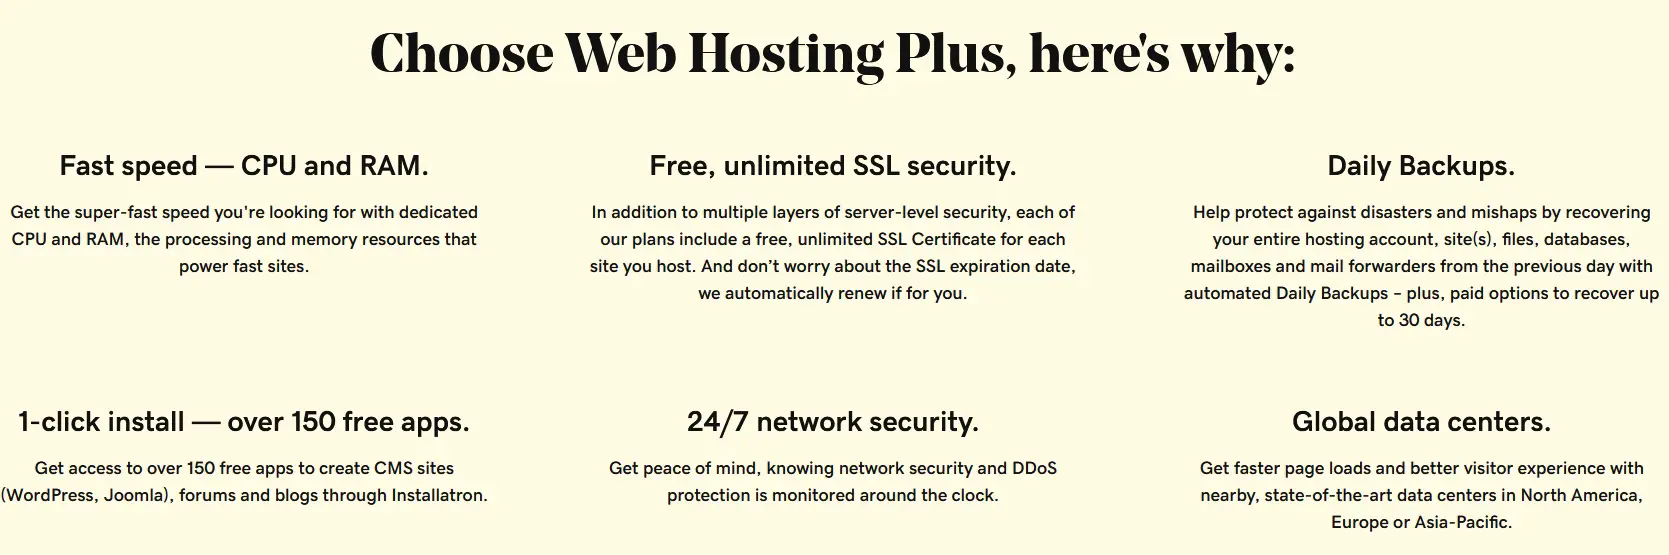 Web Hosting Plus1